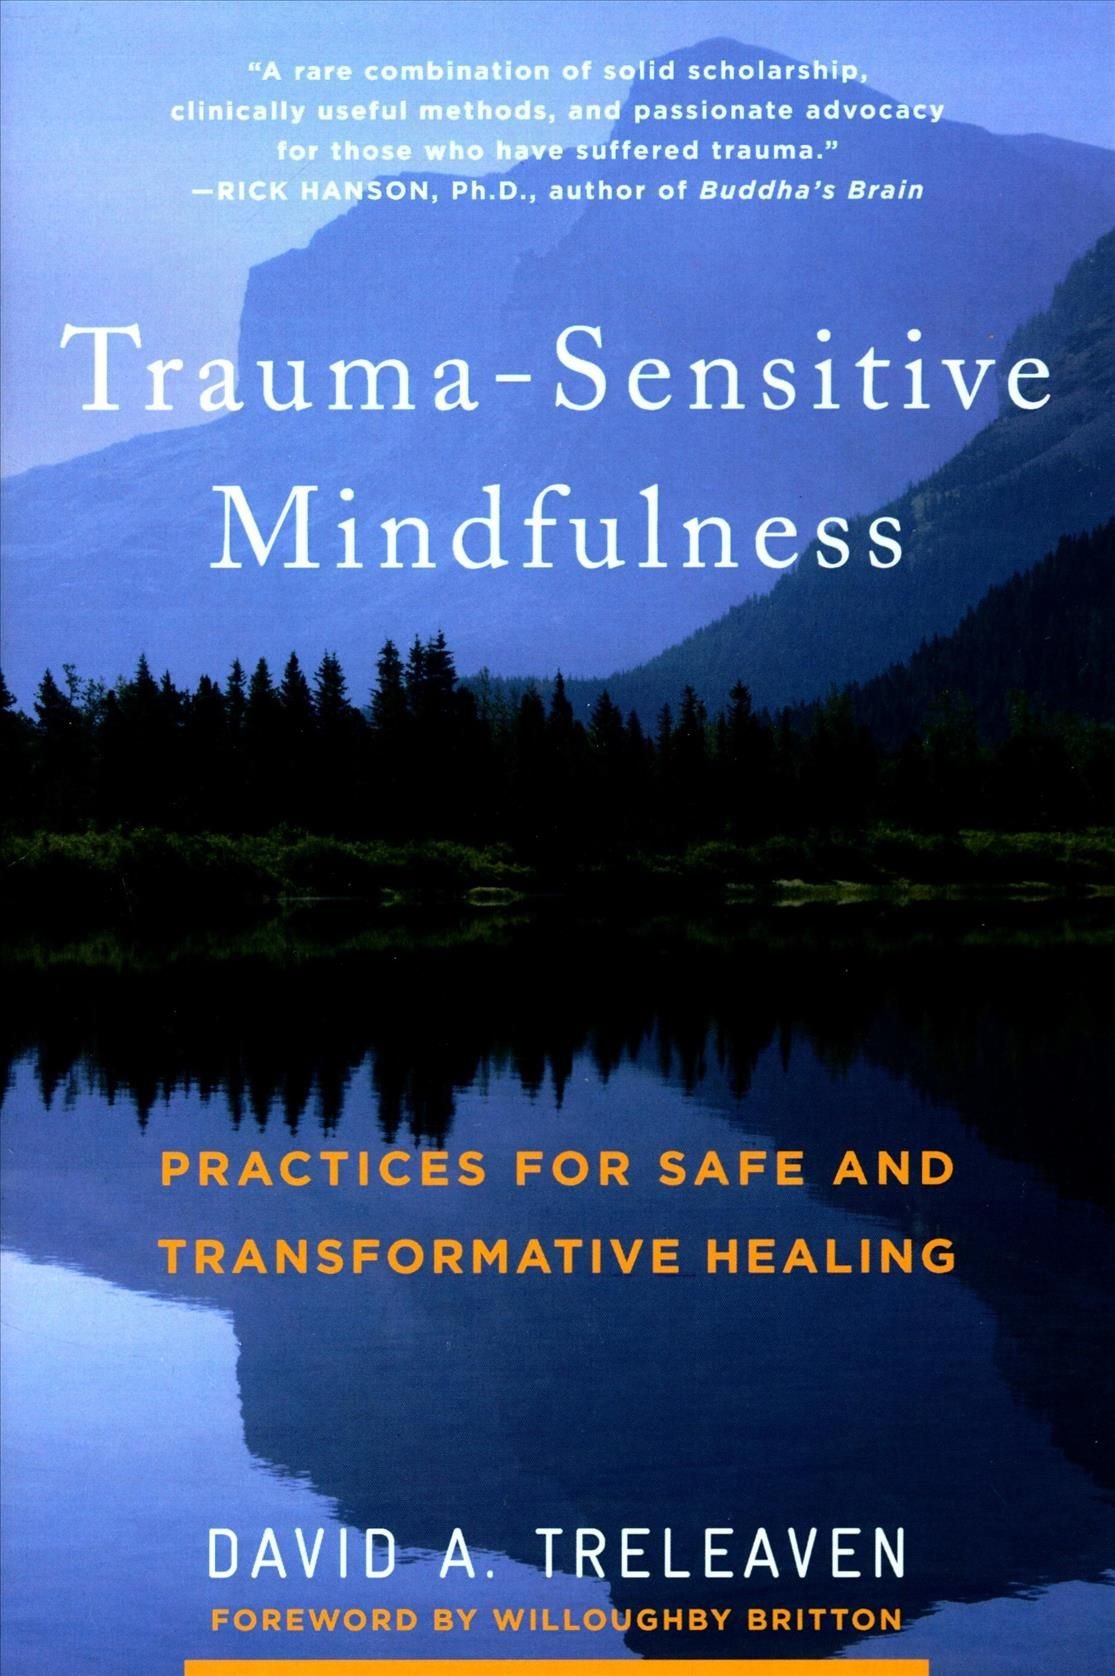 trauma sensitive mindfulness by david treleaven